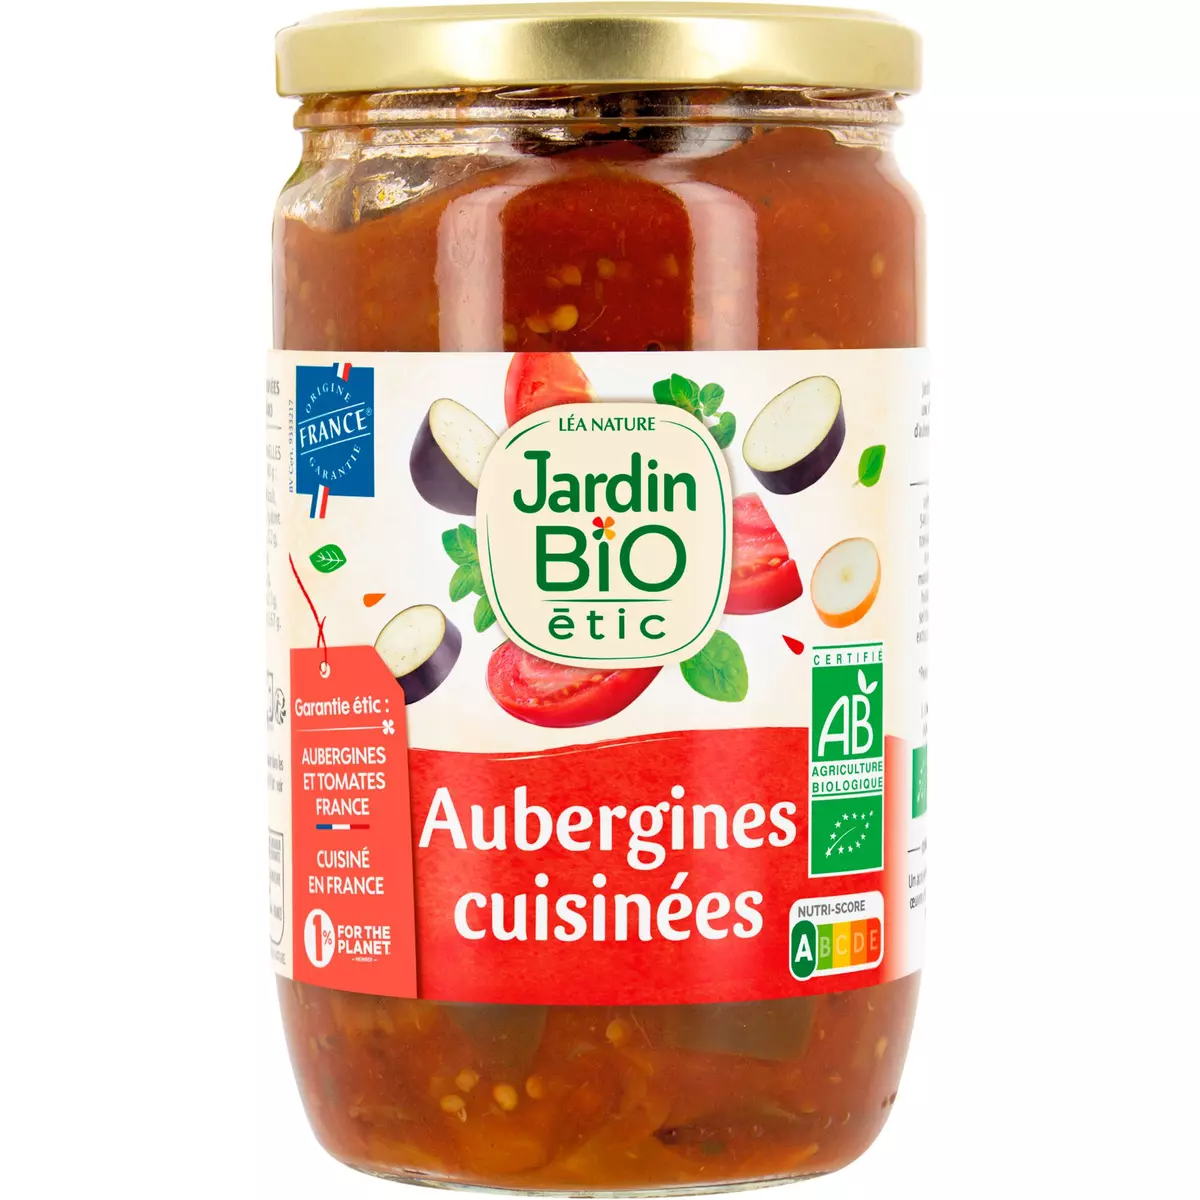 JARDIN BIO ETIC Aubergines cuisinées 650g